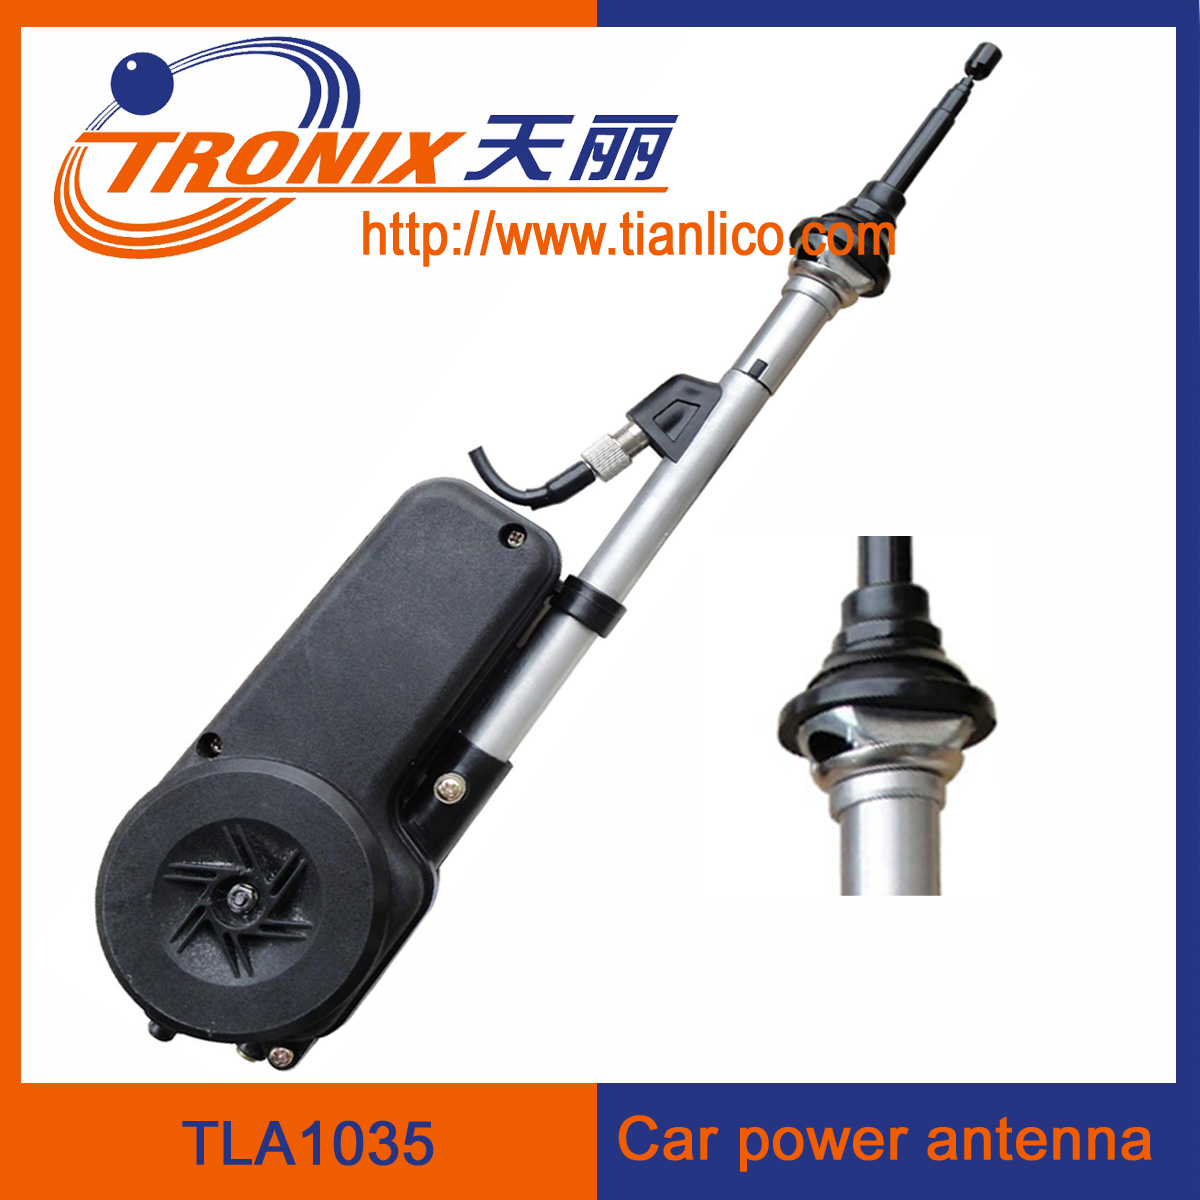 Cheap am fm radio car power antenna/ high powered car antenna TLA1035 for sale